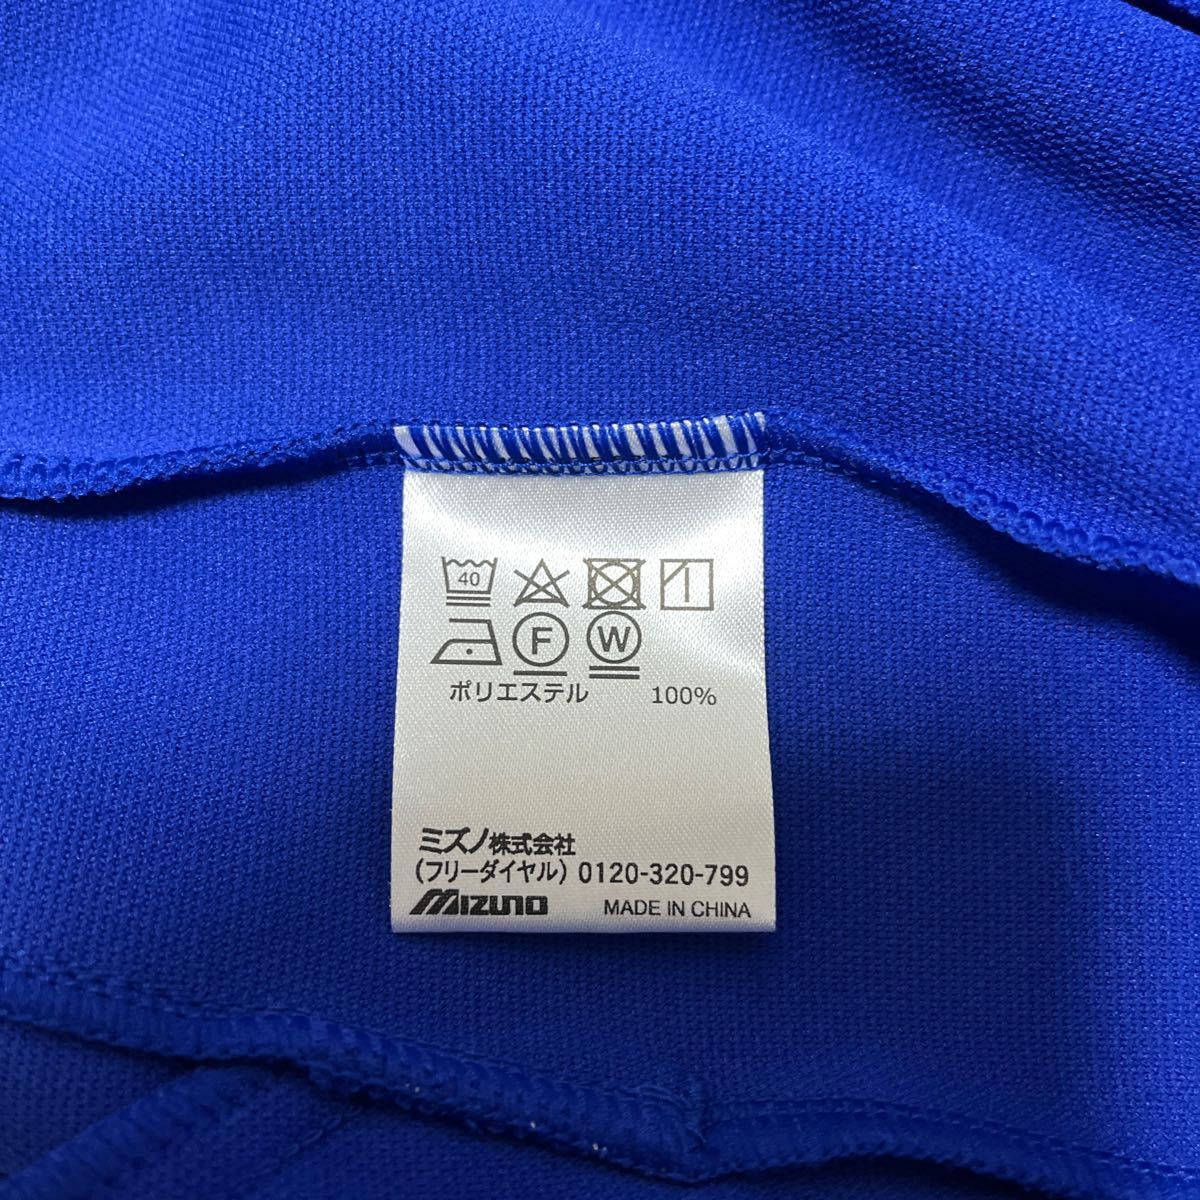 Mizuno Mizuno джерси спортивная куртка L размер голубой полиэстер 